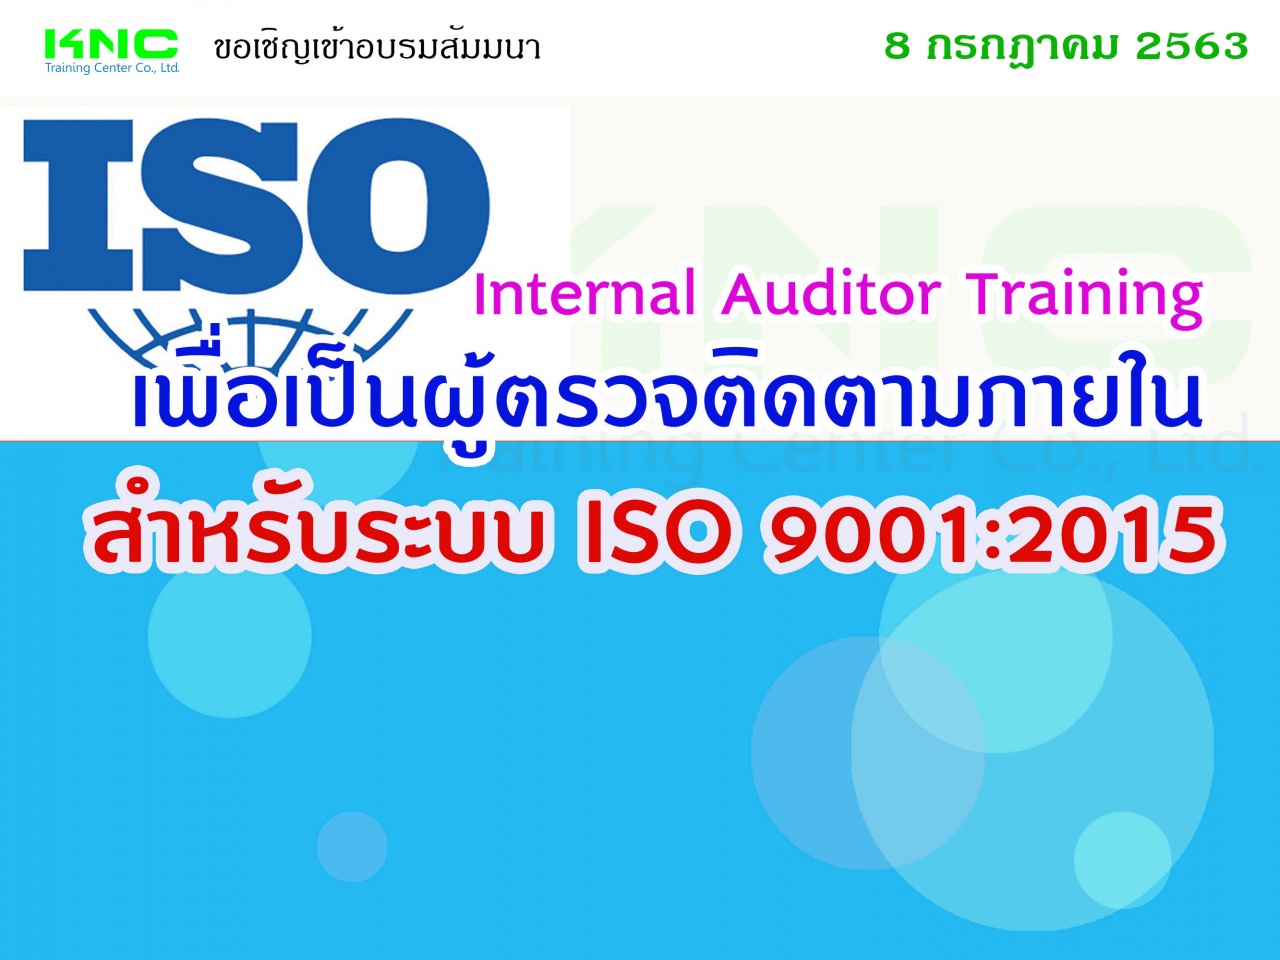 Internal Auditor Training เพื่อเป็นผู้ตรวจติดตามภายใน สำหรับระบบ ISO 9001:2015